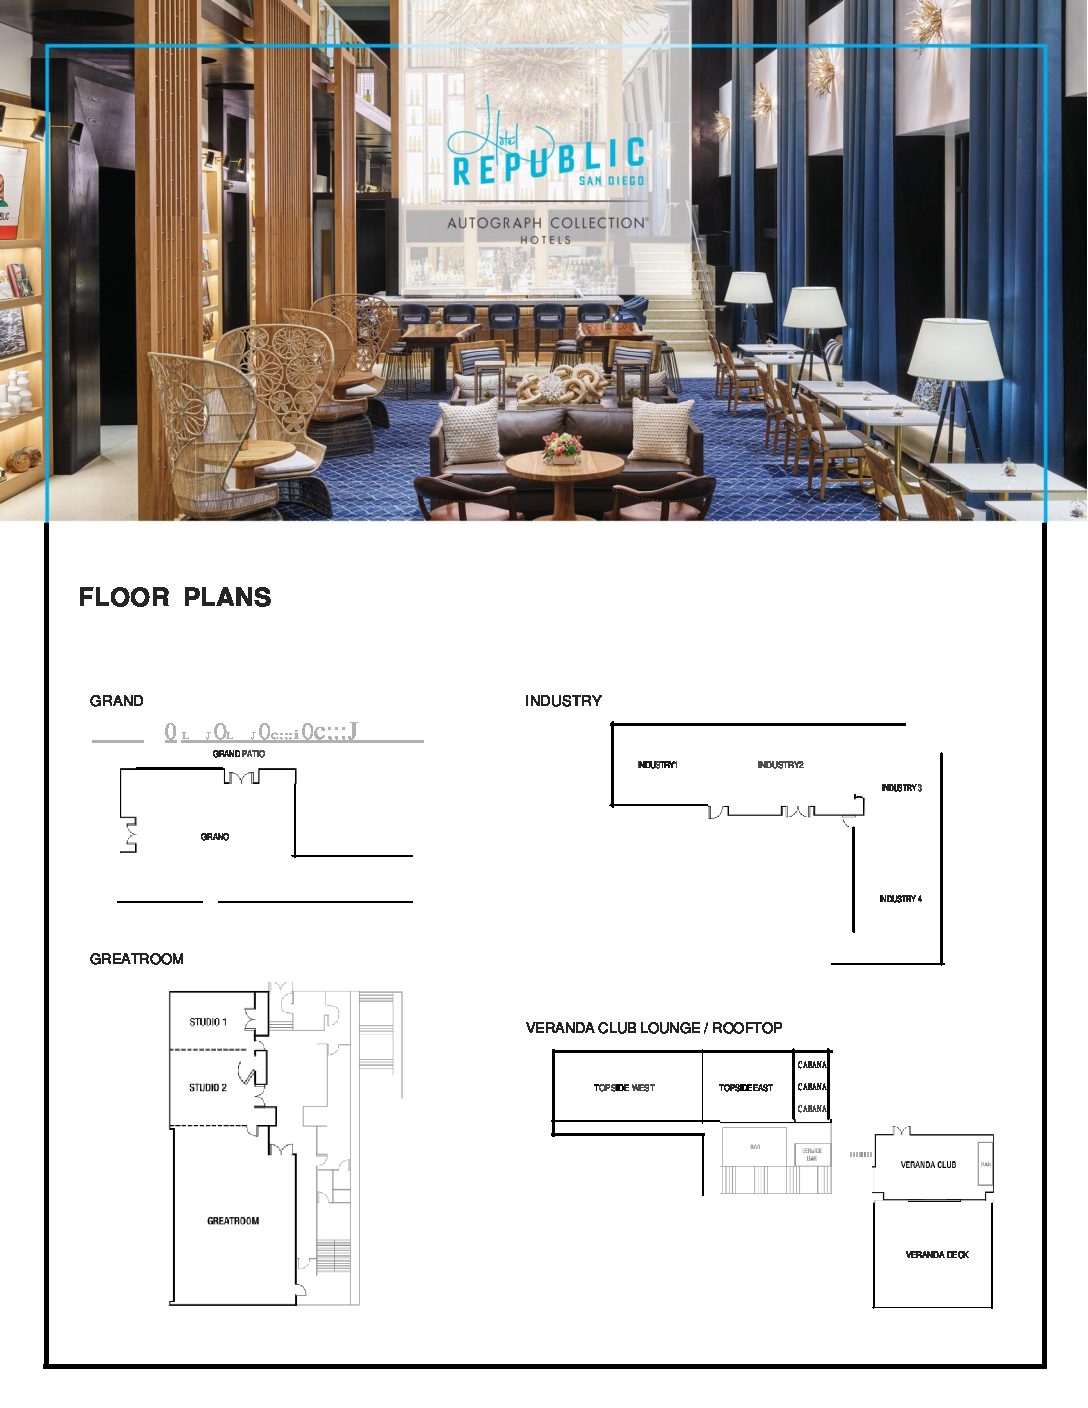 Hotel Republic Floor Plan Capacity